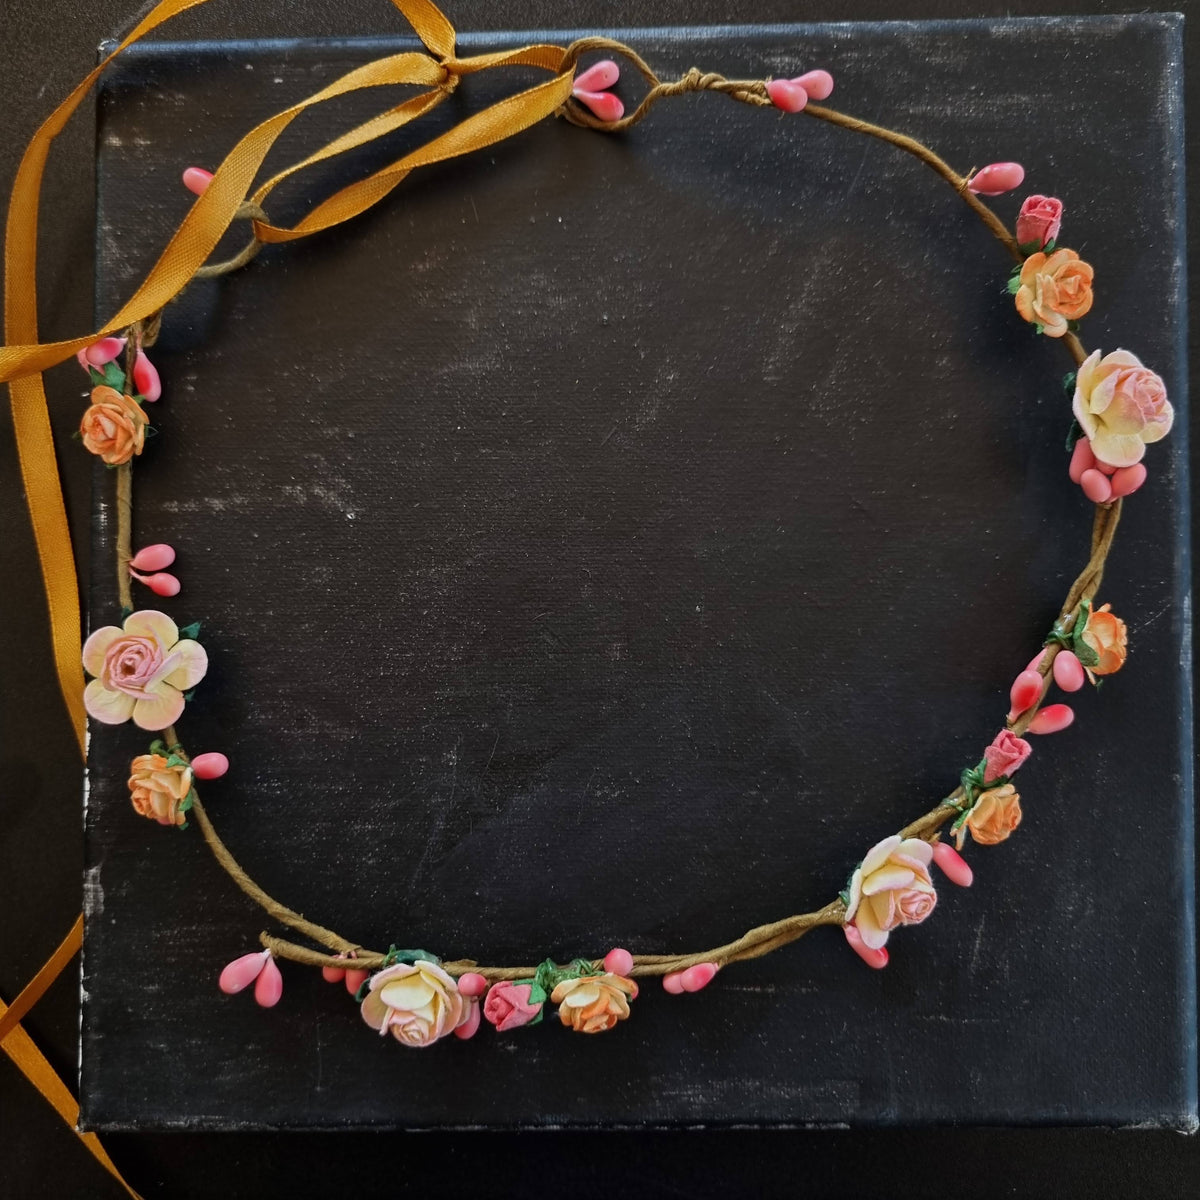 Blomsterkrans med blomster i orange nuancer - Hårpynt med blomster og perler til bryllup, konfirmation og fest